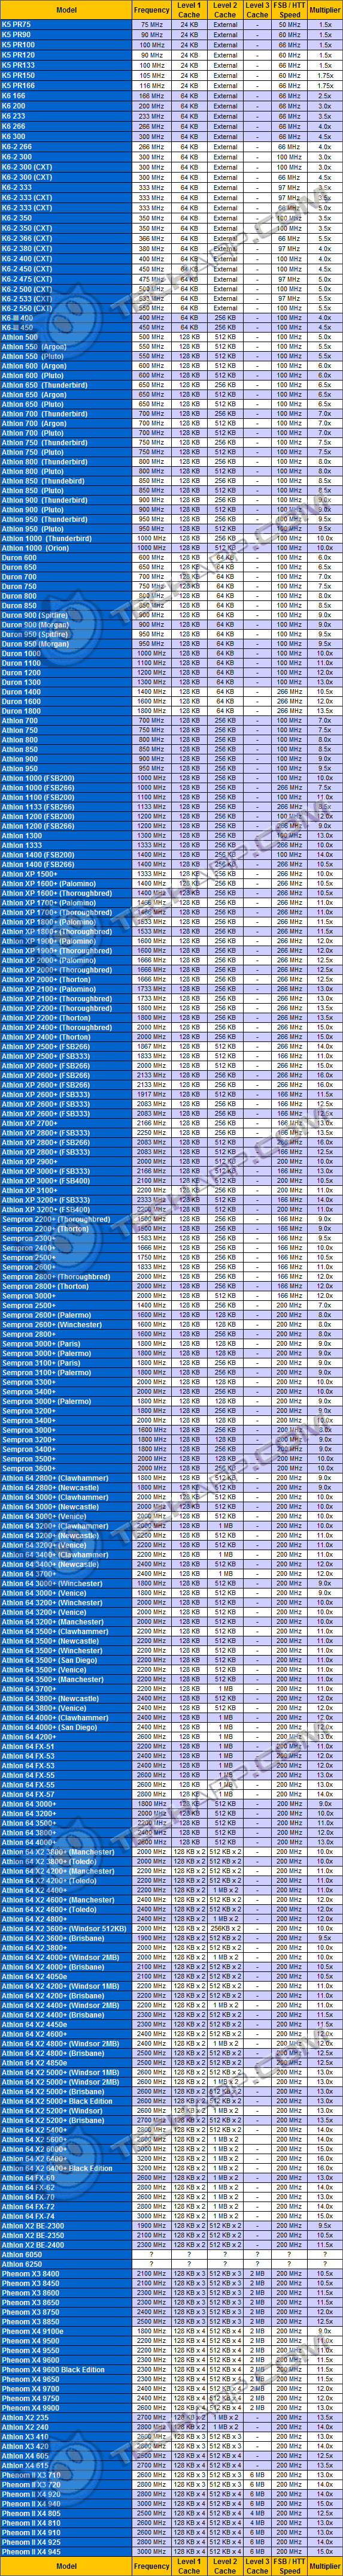 CPU Performance (AMD)